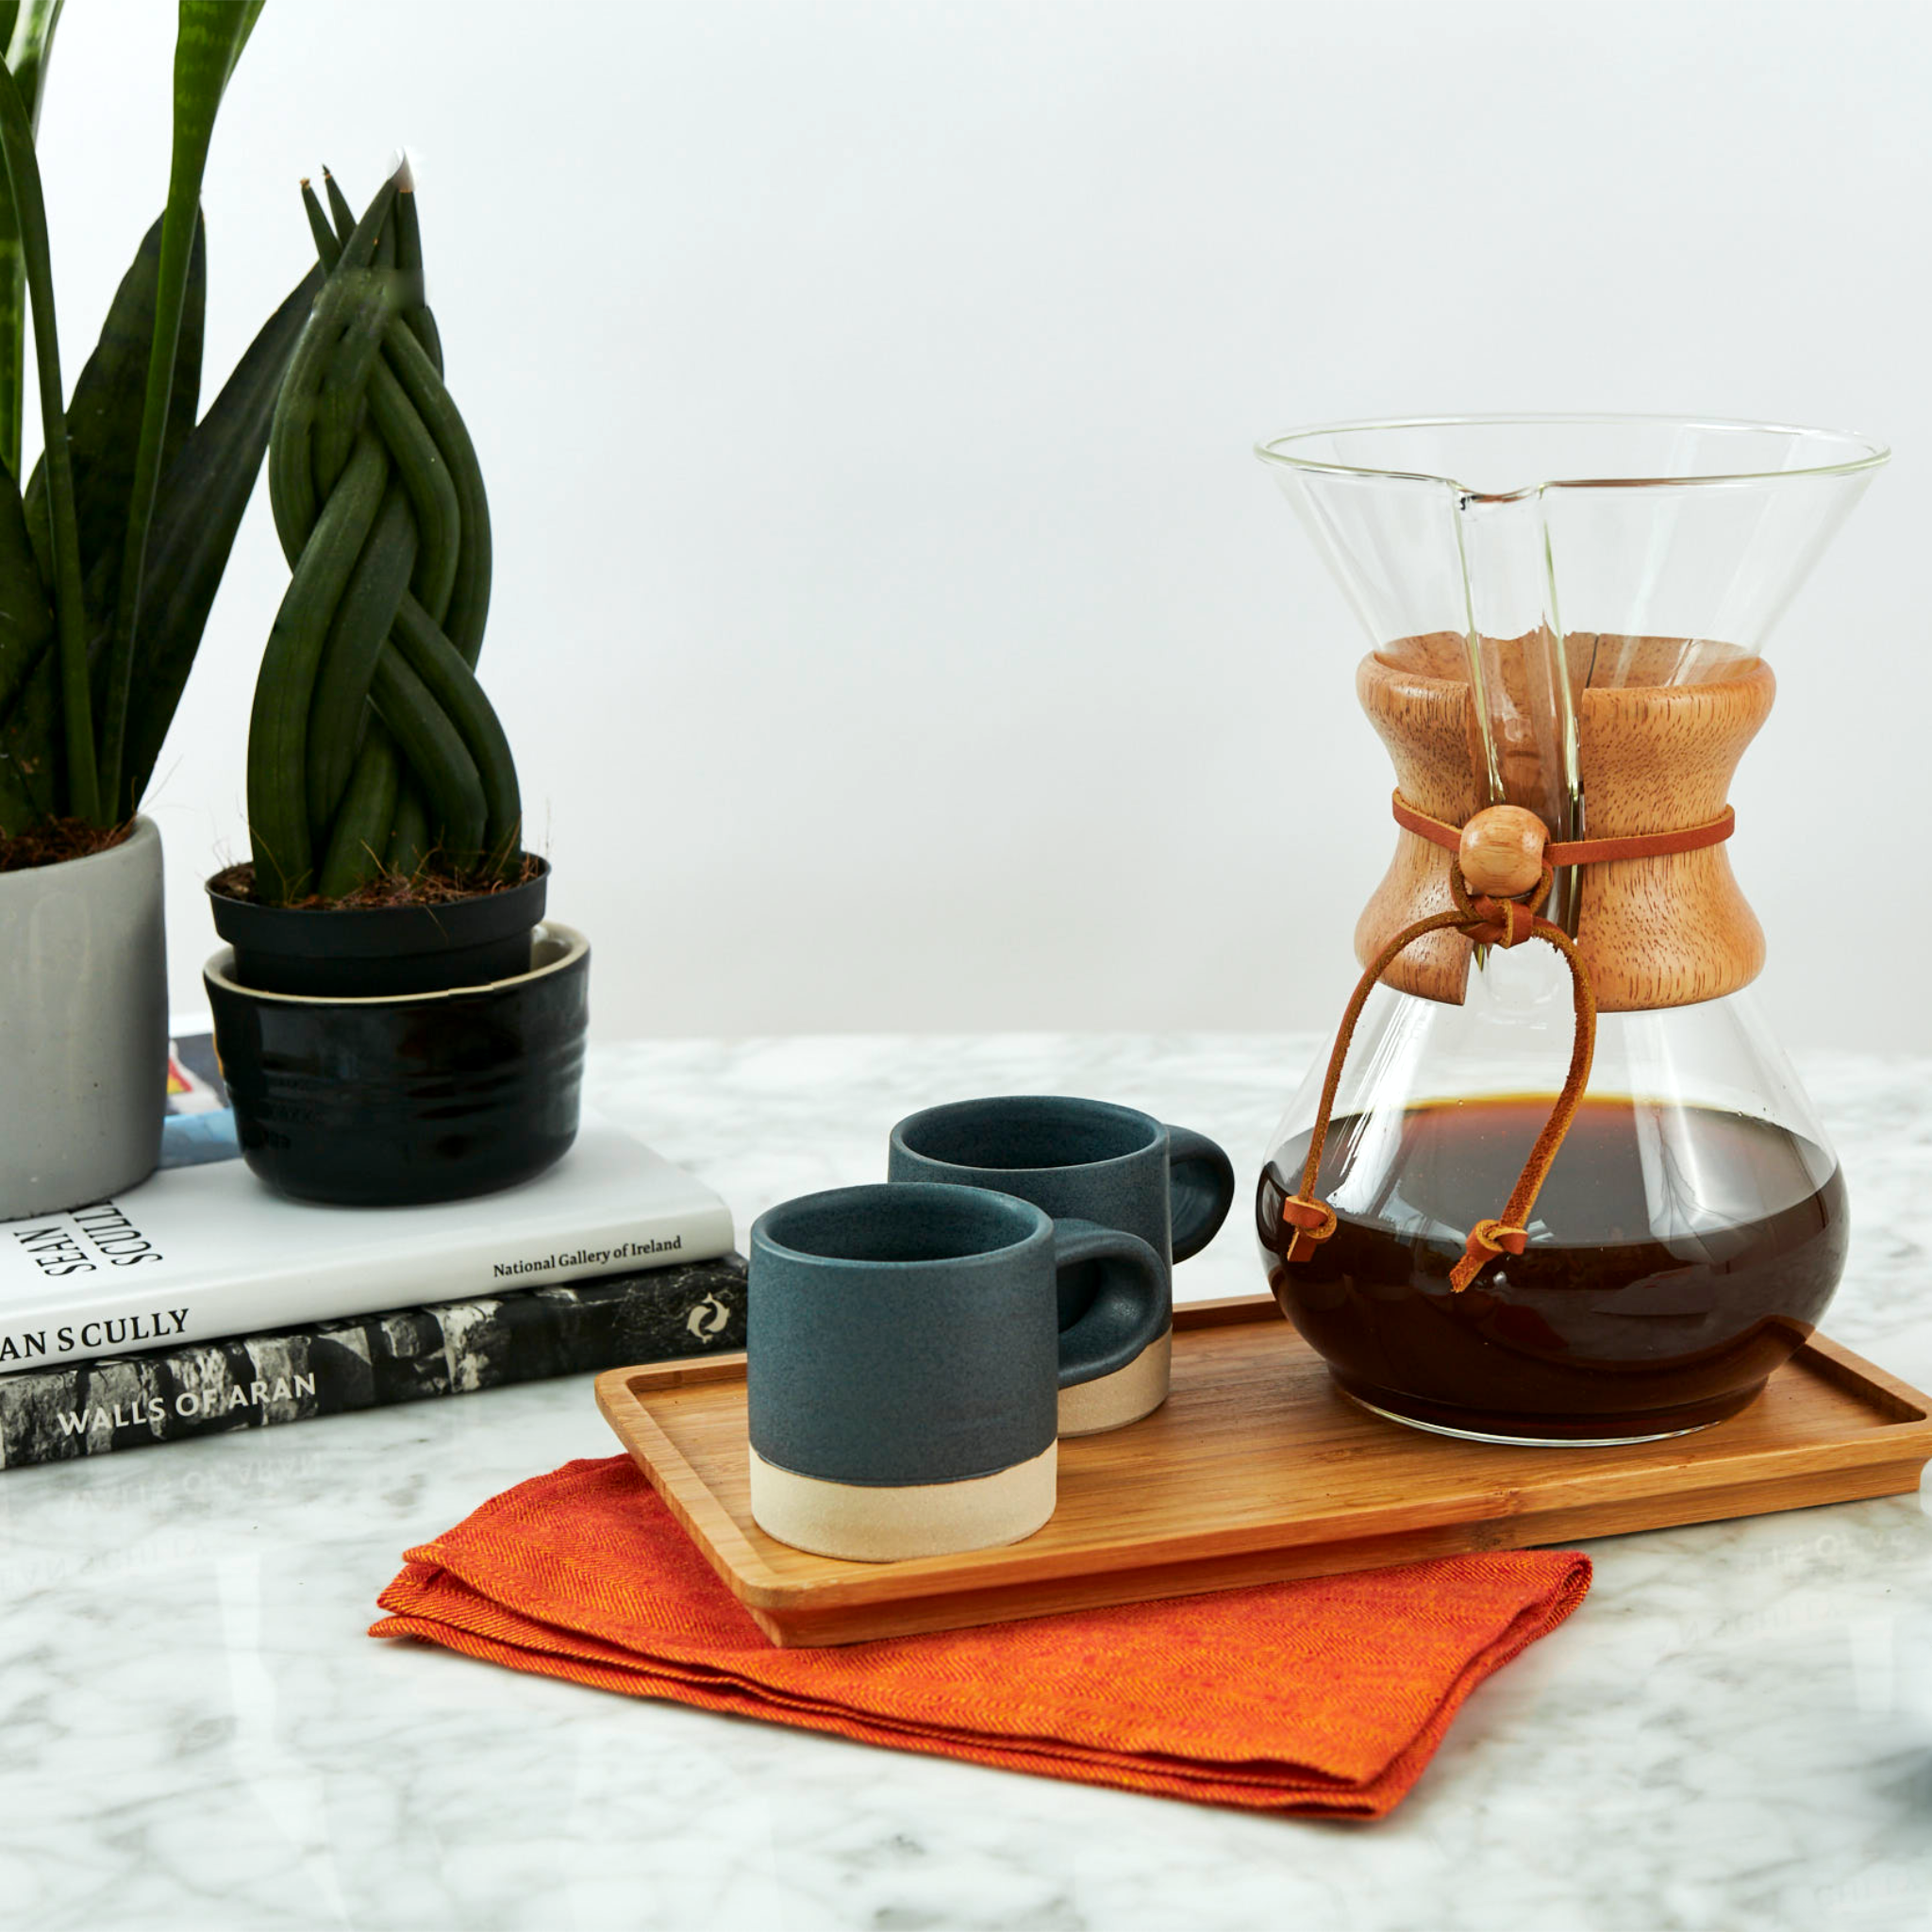 Chemex Classic Coffeemaker 6CUP, 900ml – I love coffee